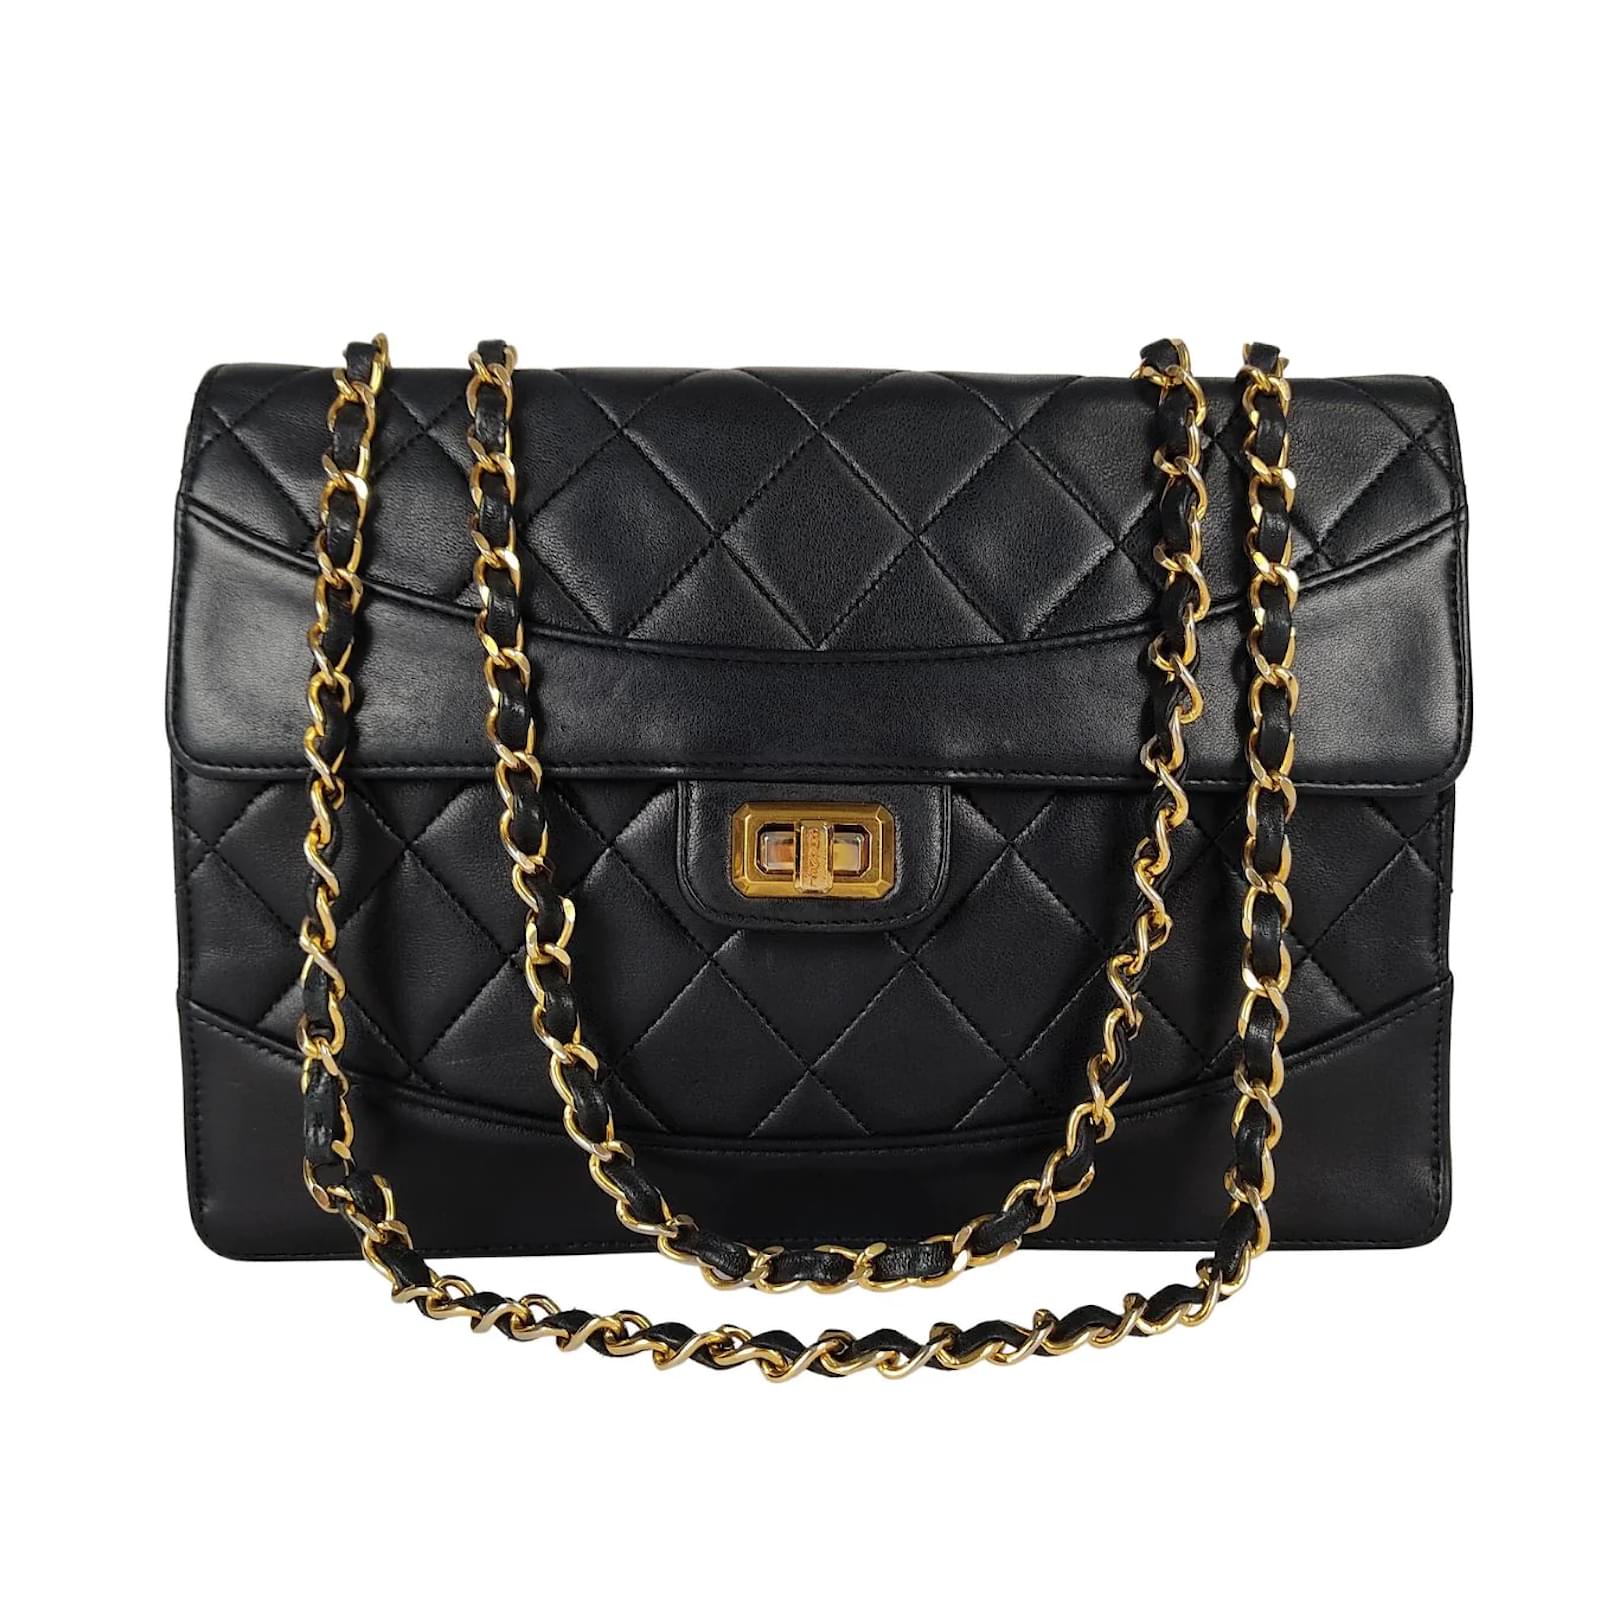 Chanel Chanel shoulder bag Timeless Classica 2.55 matelassé in